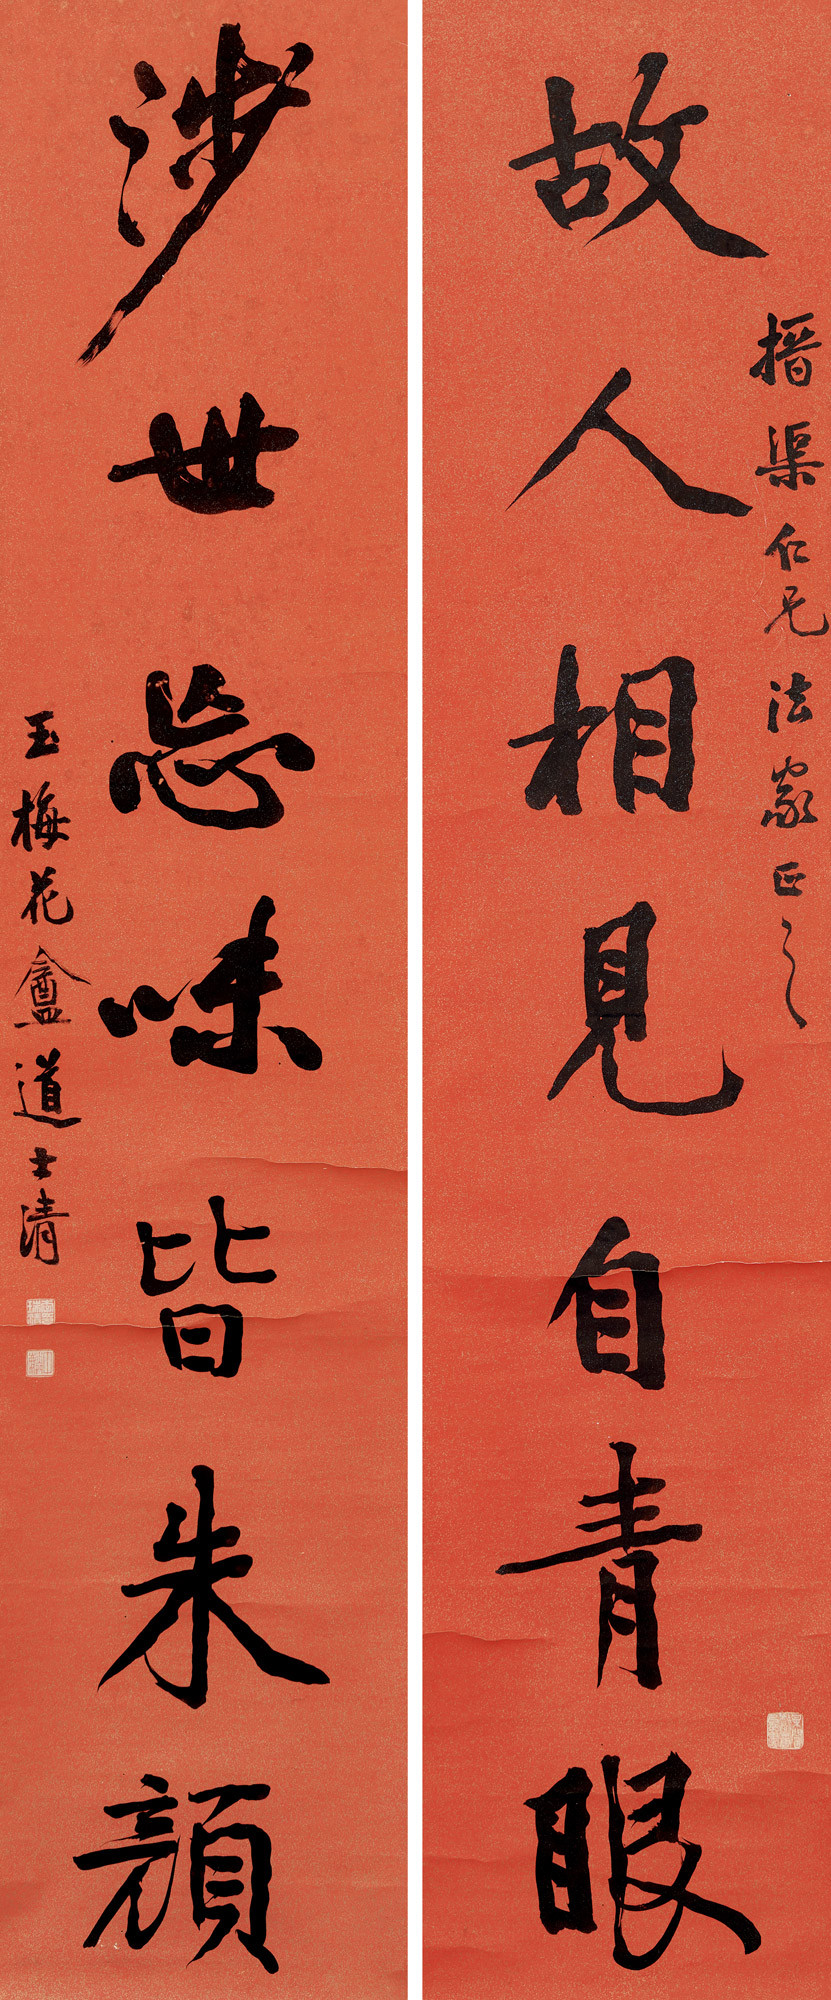 Seven - Characters Calligraphic Couplet in Running Script